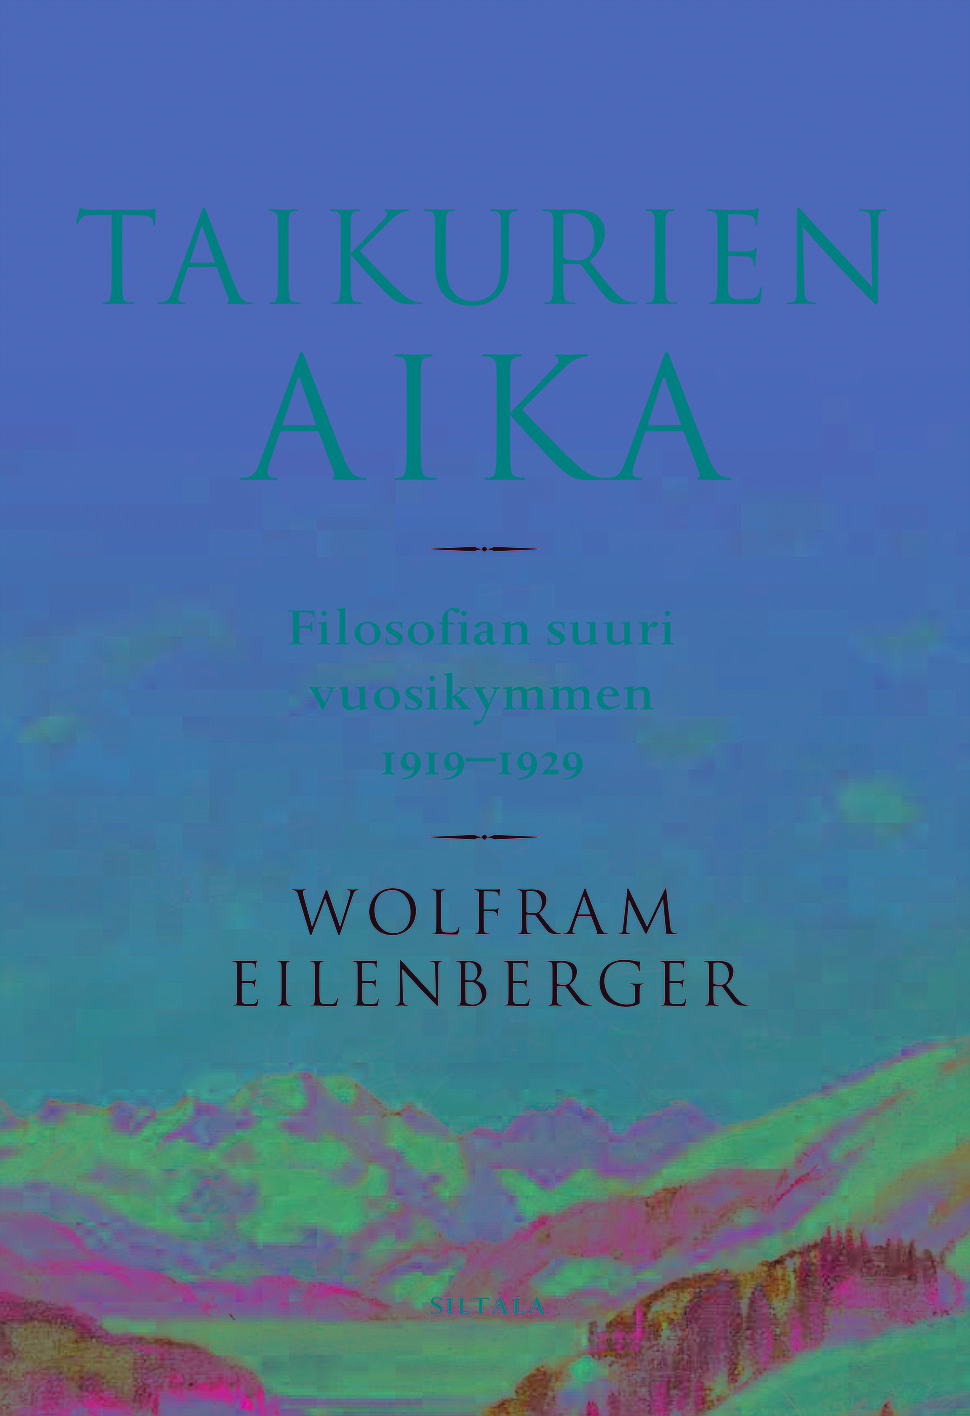 Eilenberger, Wolfram - Taikurien aika: Filosofian suuri vuosikymmen 1919-1929, e-bok